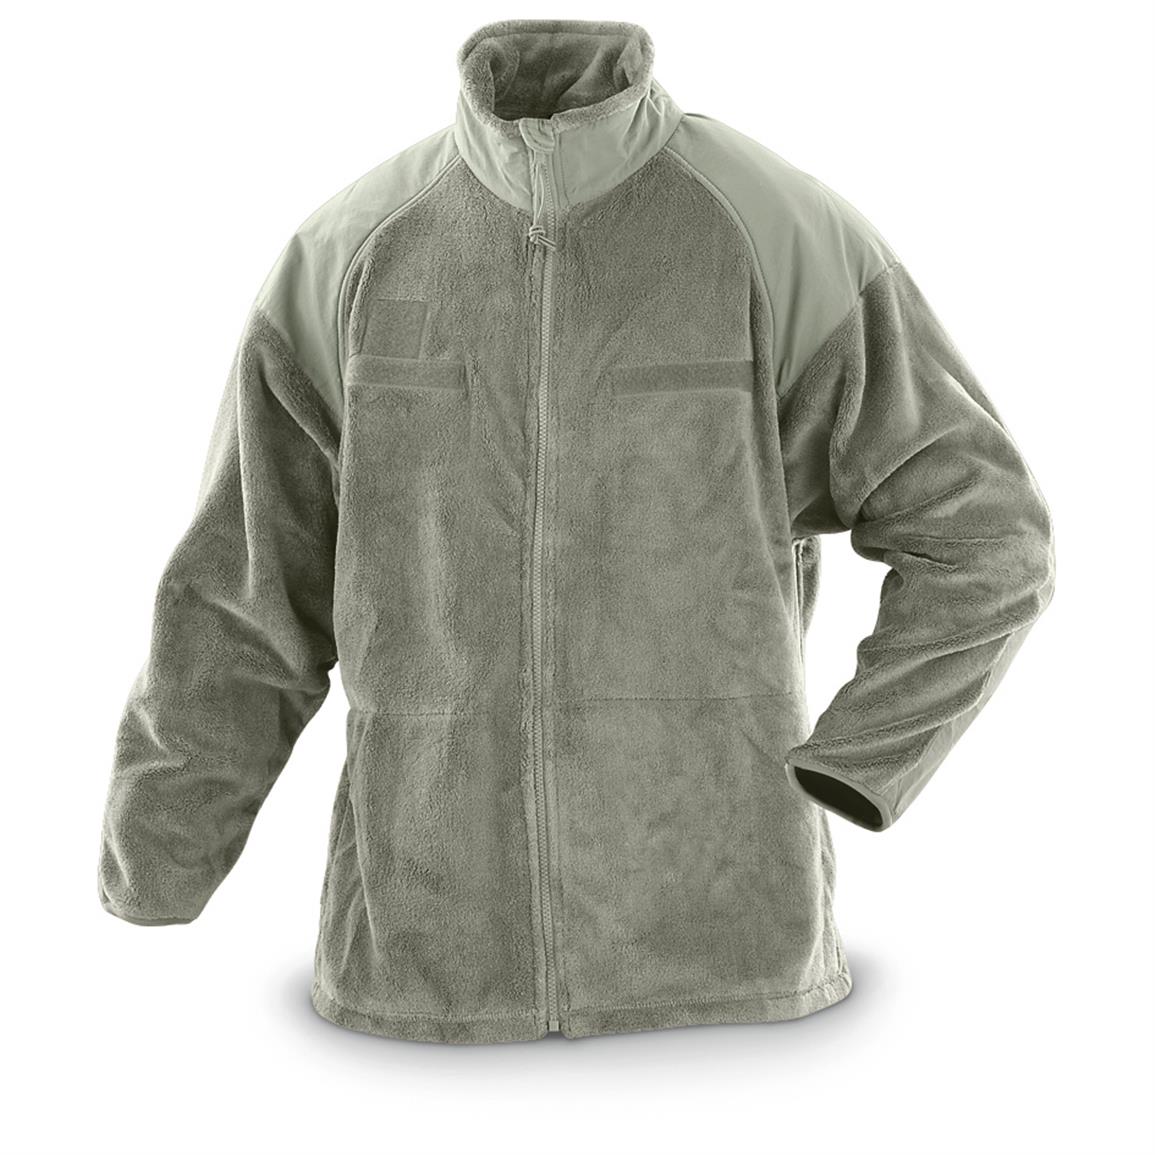 Large Regular  Military Fleece Jacket PolarTec Peckham USA Genuine    Excellent 